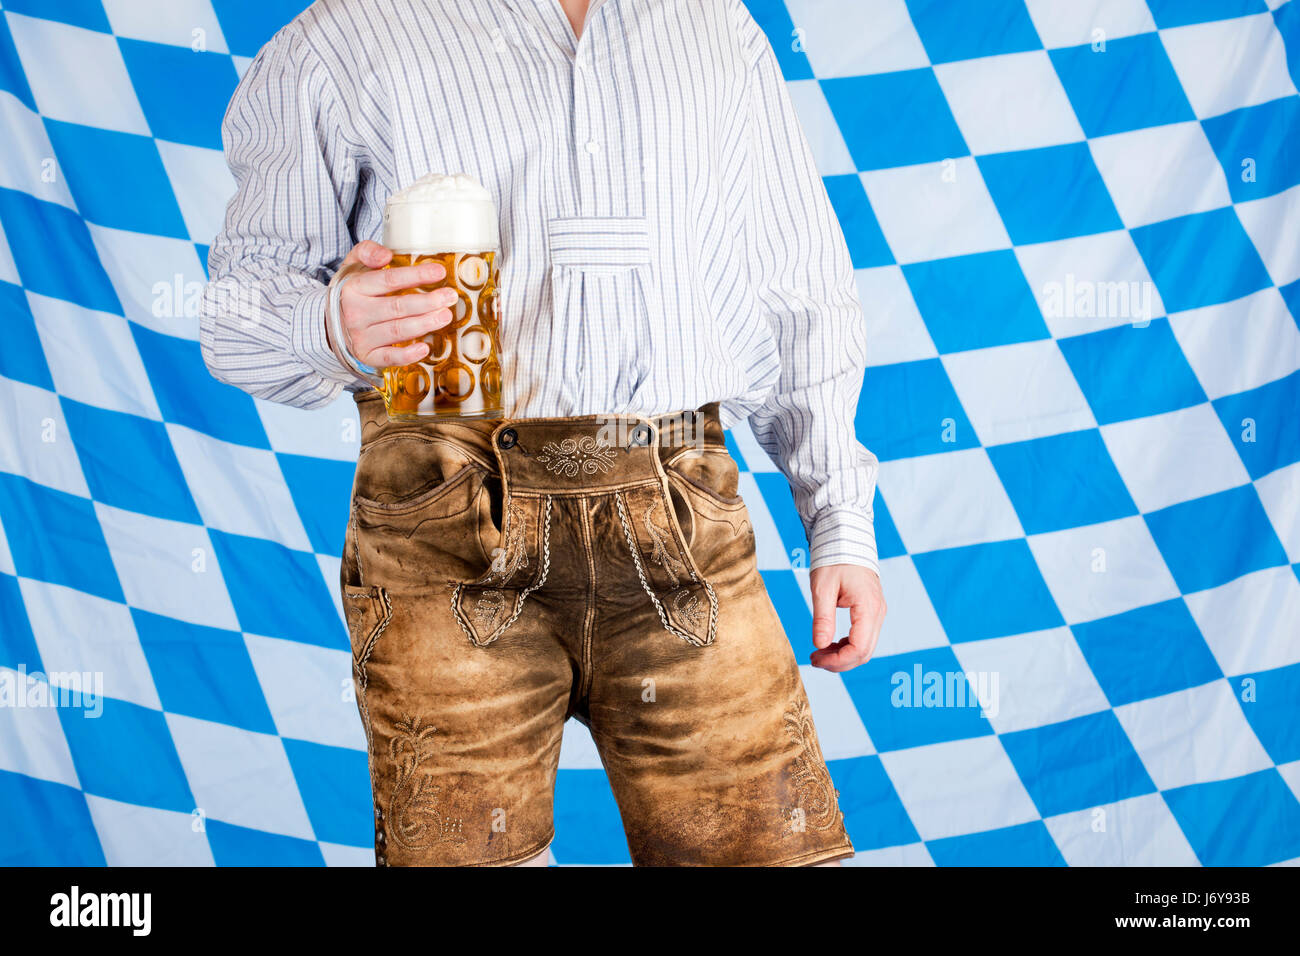 man with oktoberfest beer stein Stock Photo